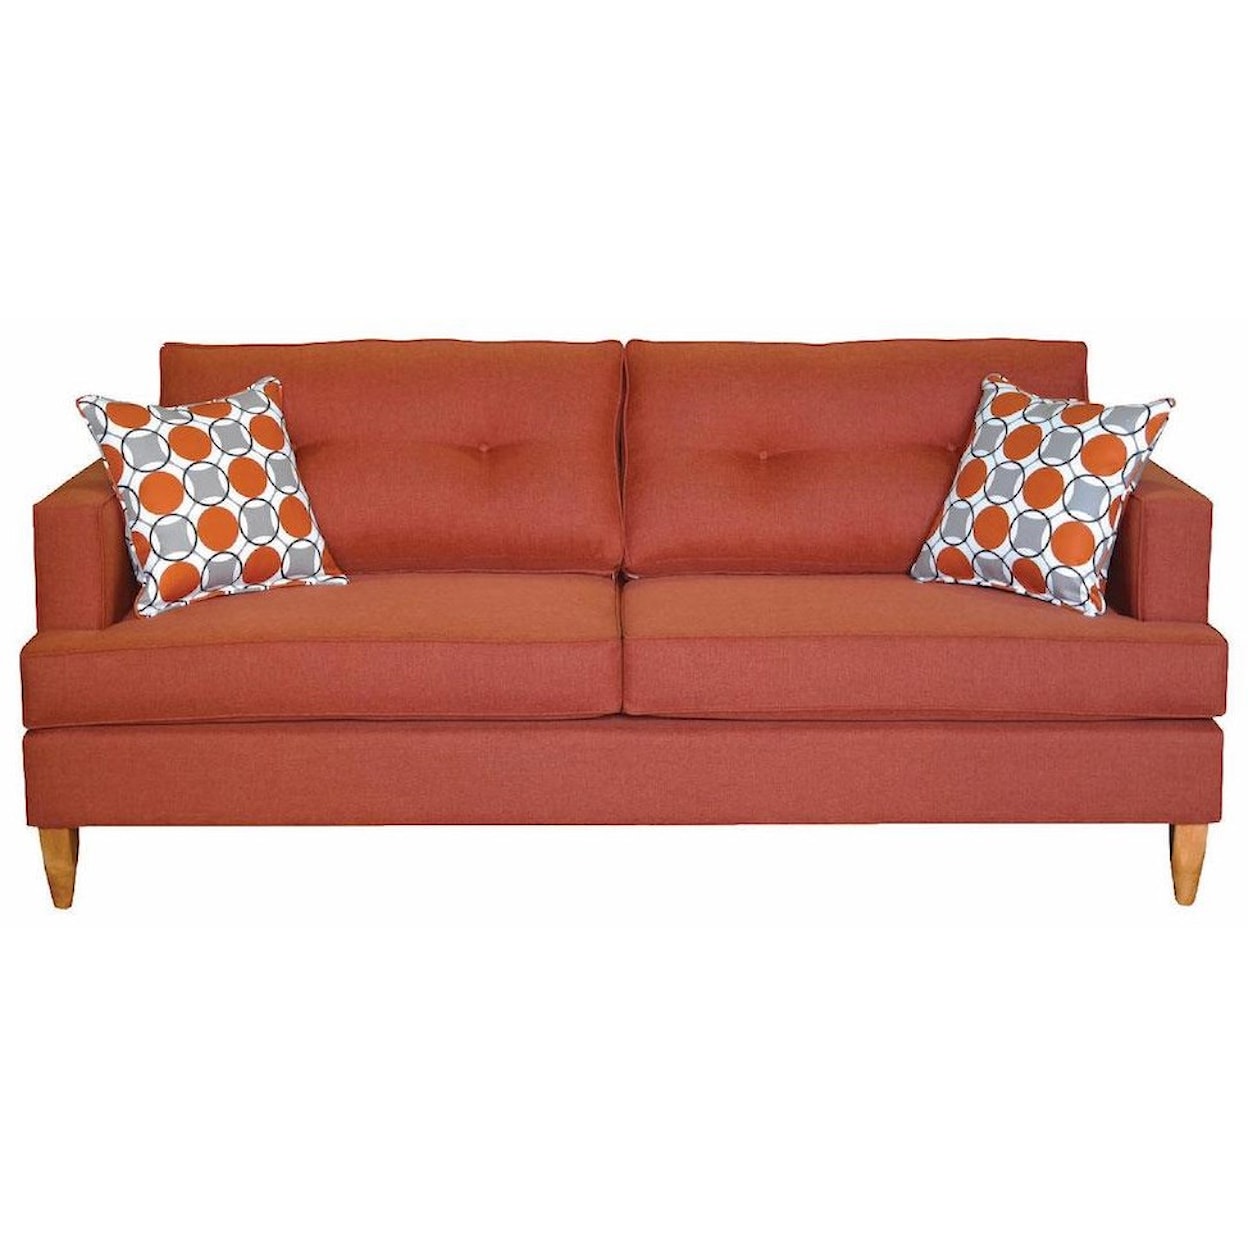 Sussex Upholstery Co. Jett 3 Cushion Sofa